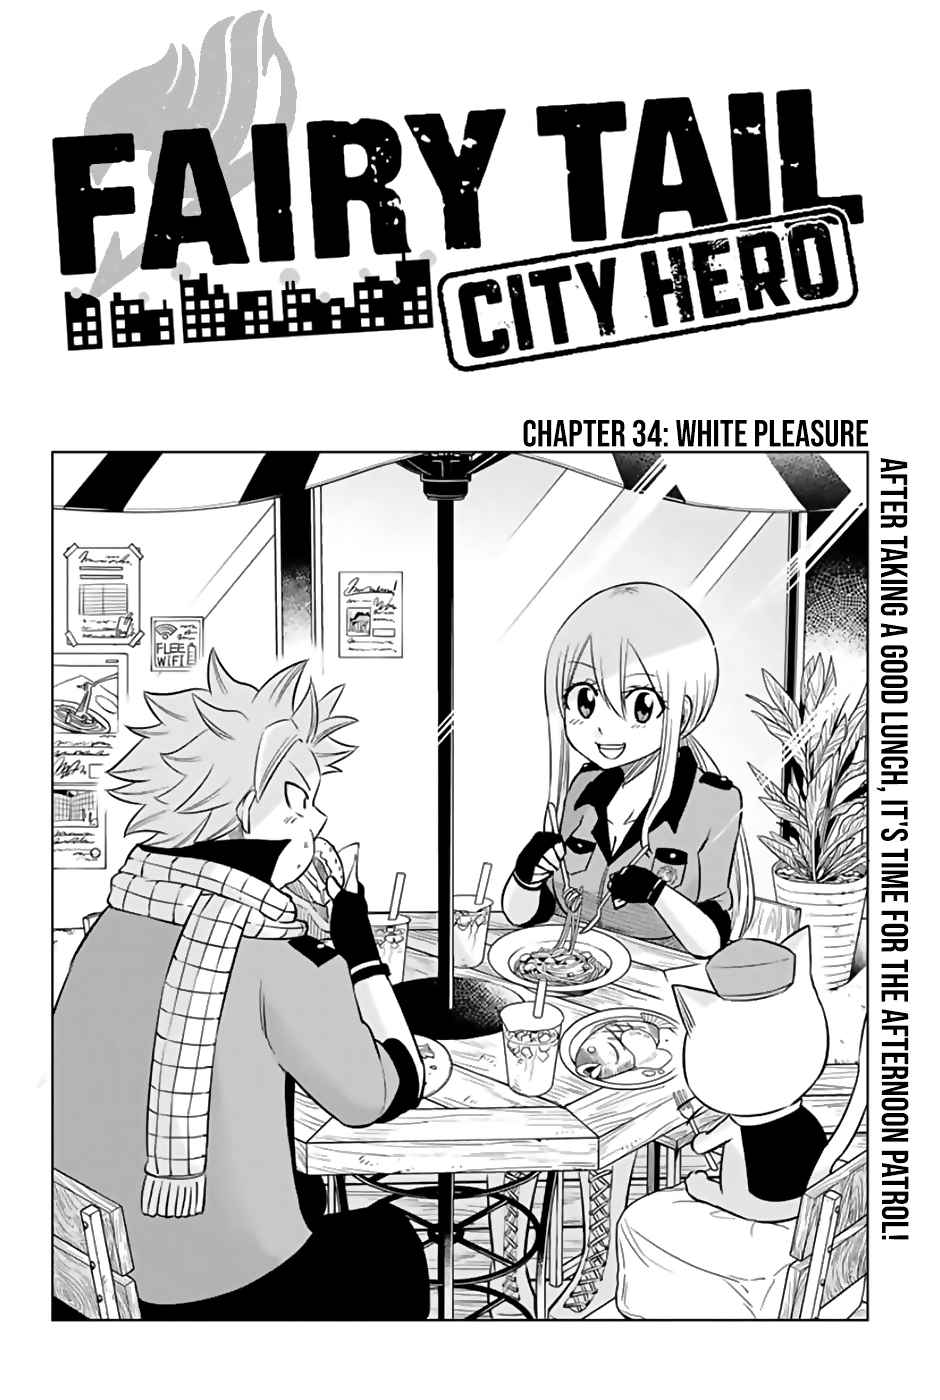 Fairy Tail: City Hero Ch. 34 White Pleasure